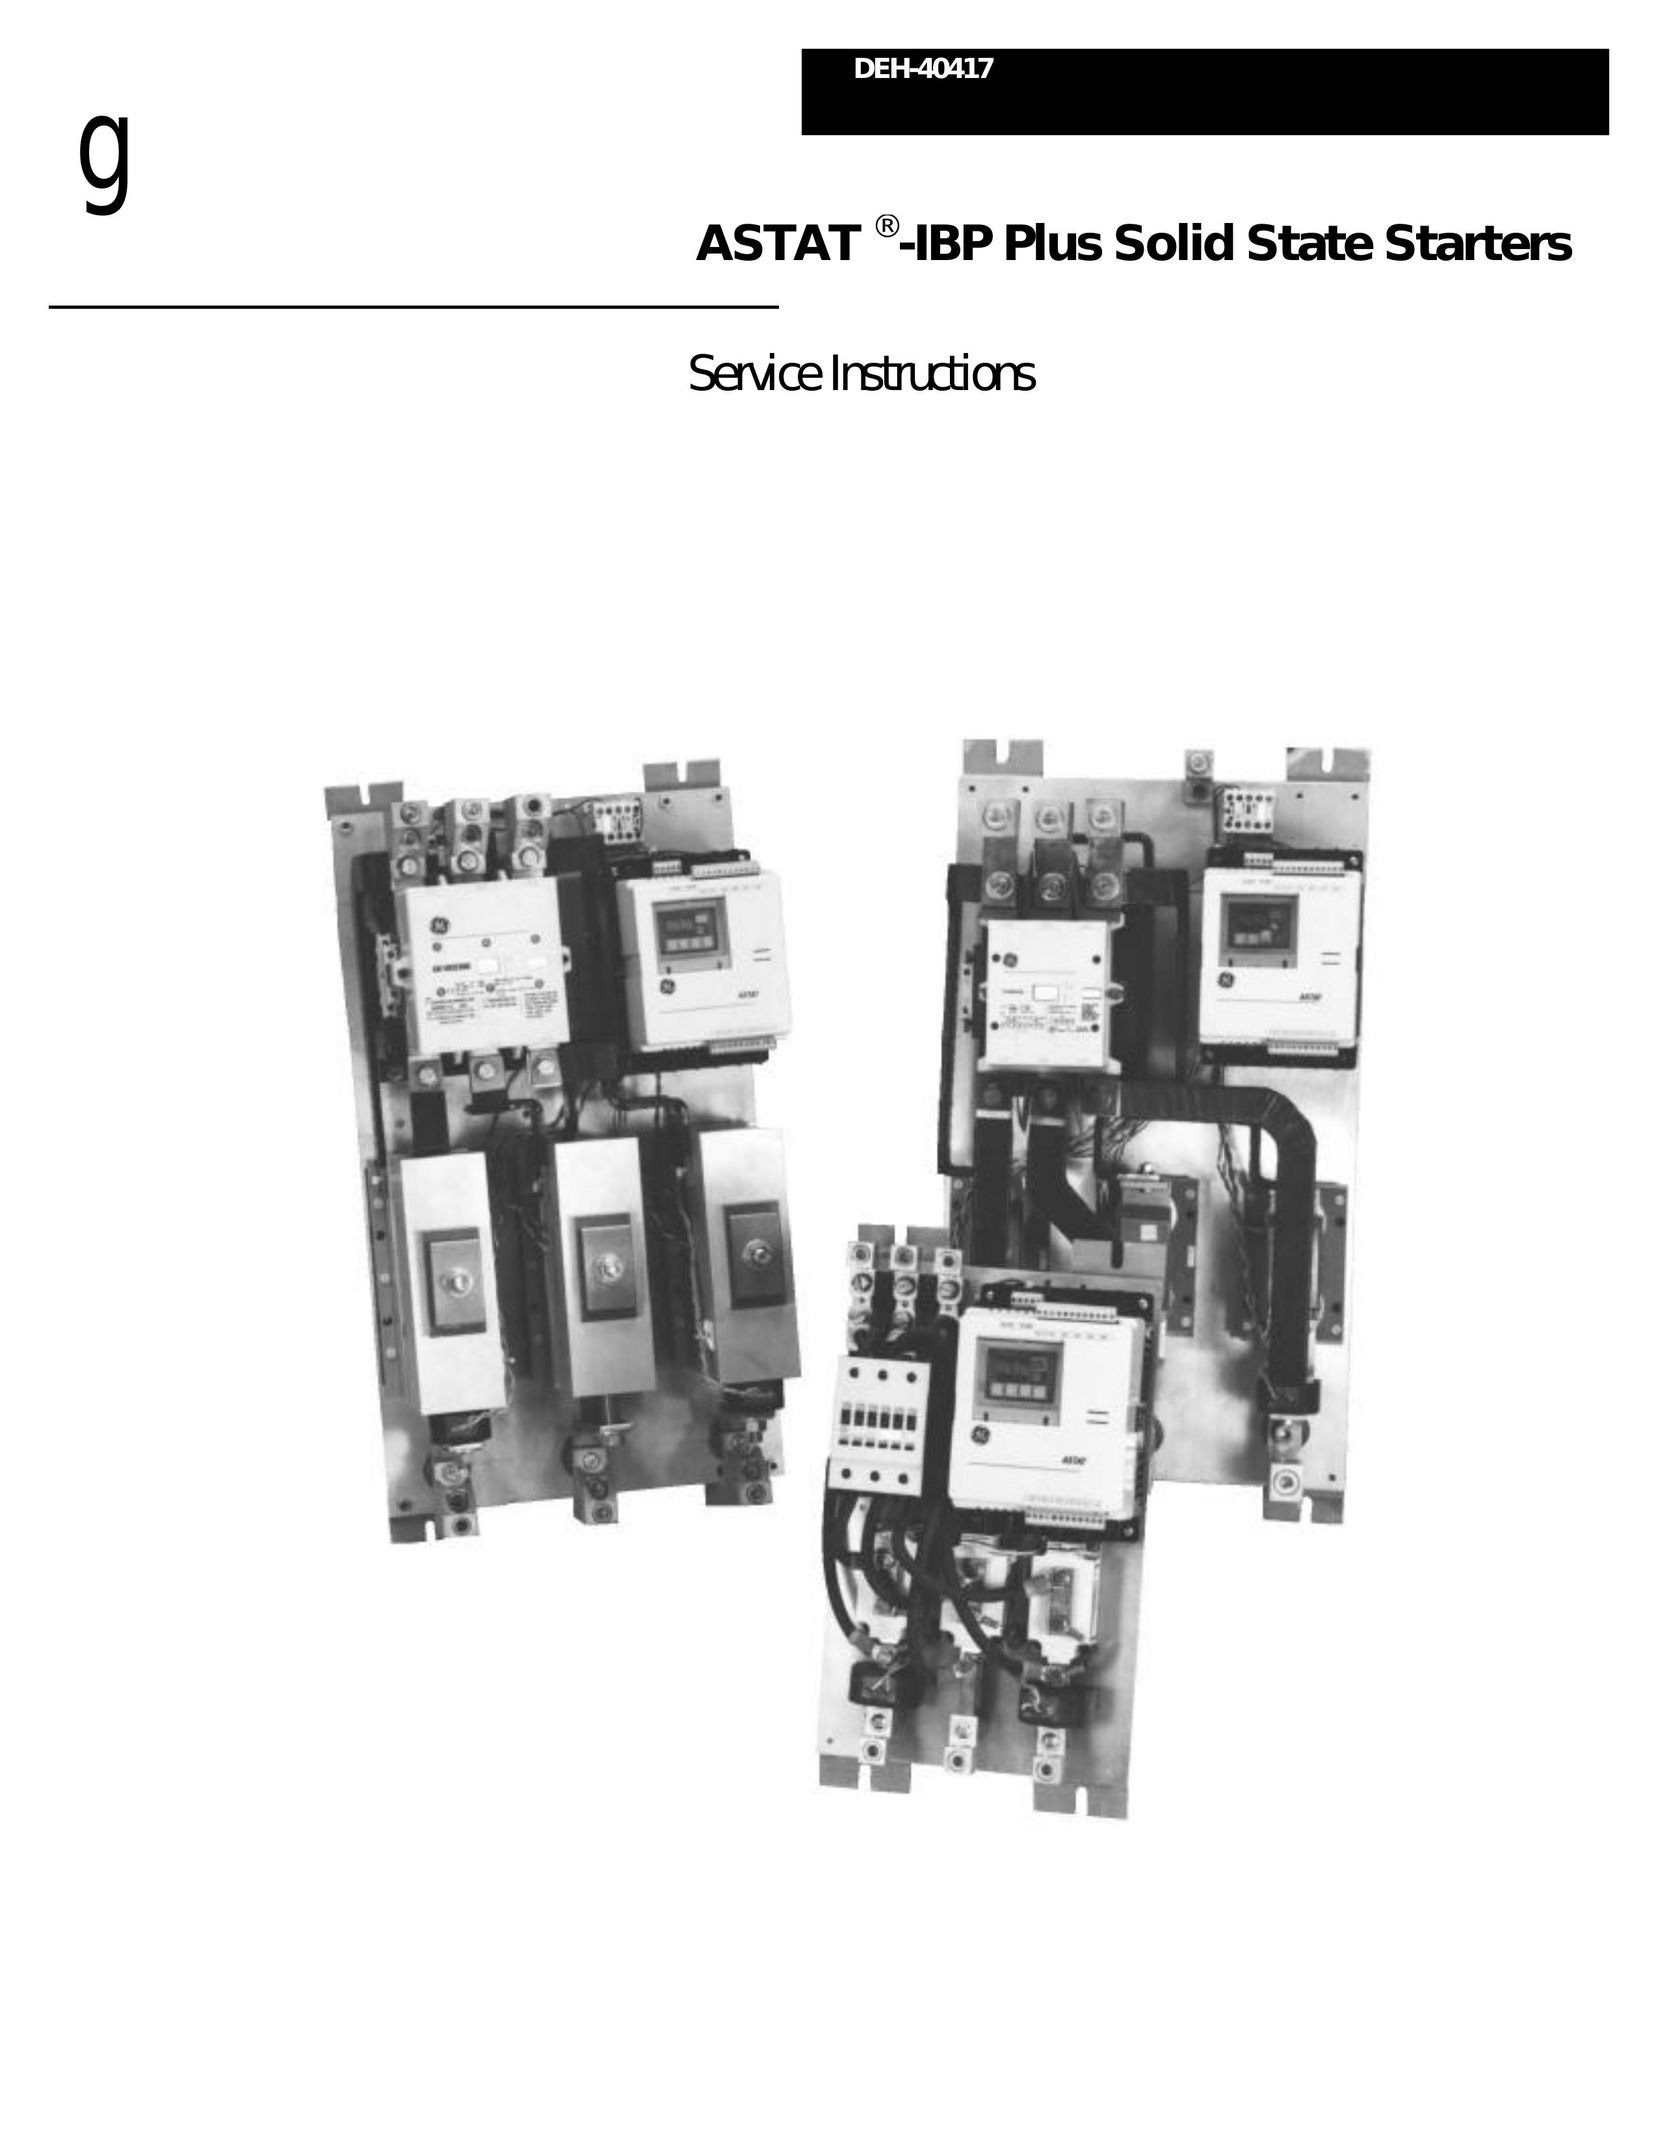 GE DEH-40417 Power Supply User Manual